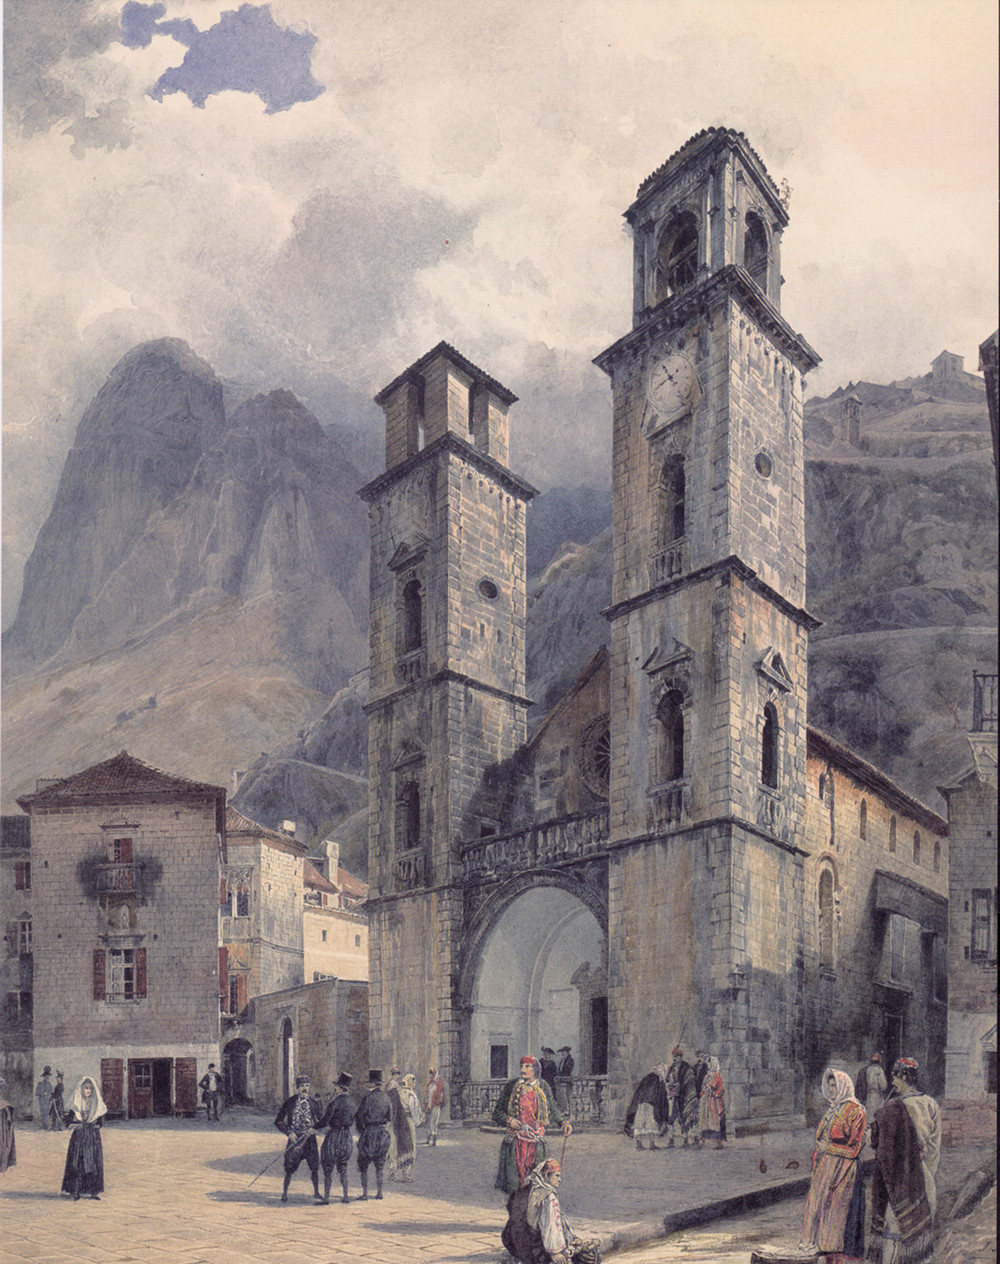 The Cathedral Square in Cattaro by Rudolf von Alt, 1841